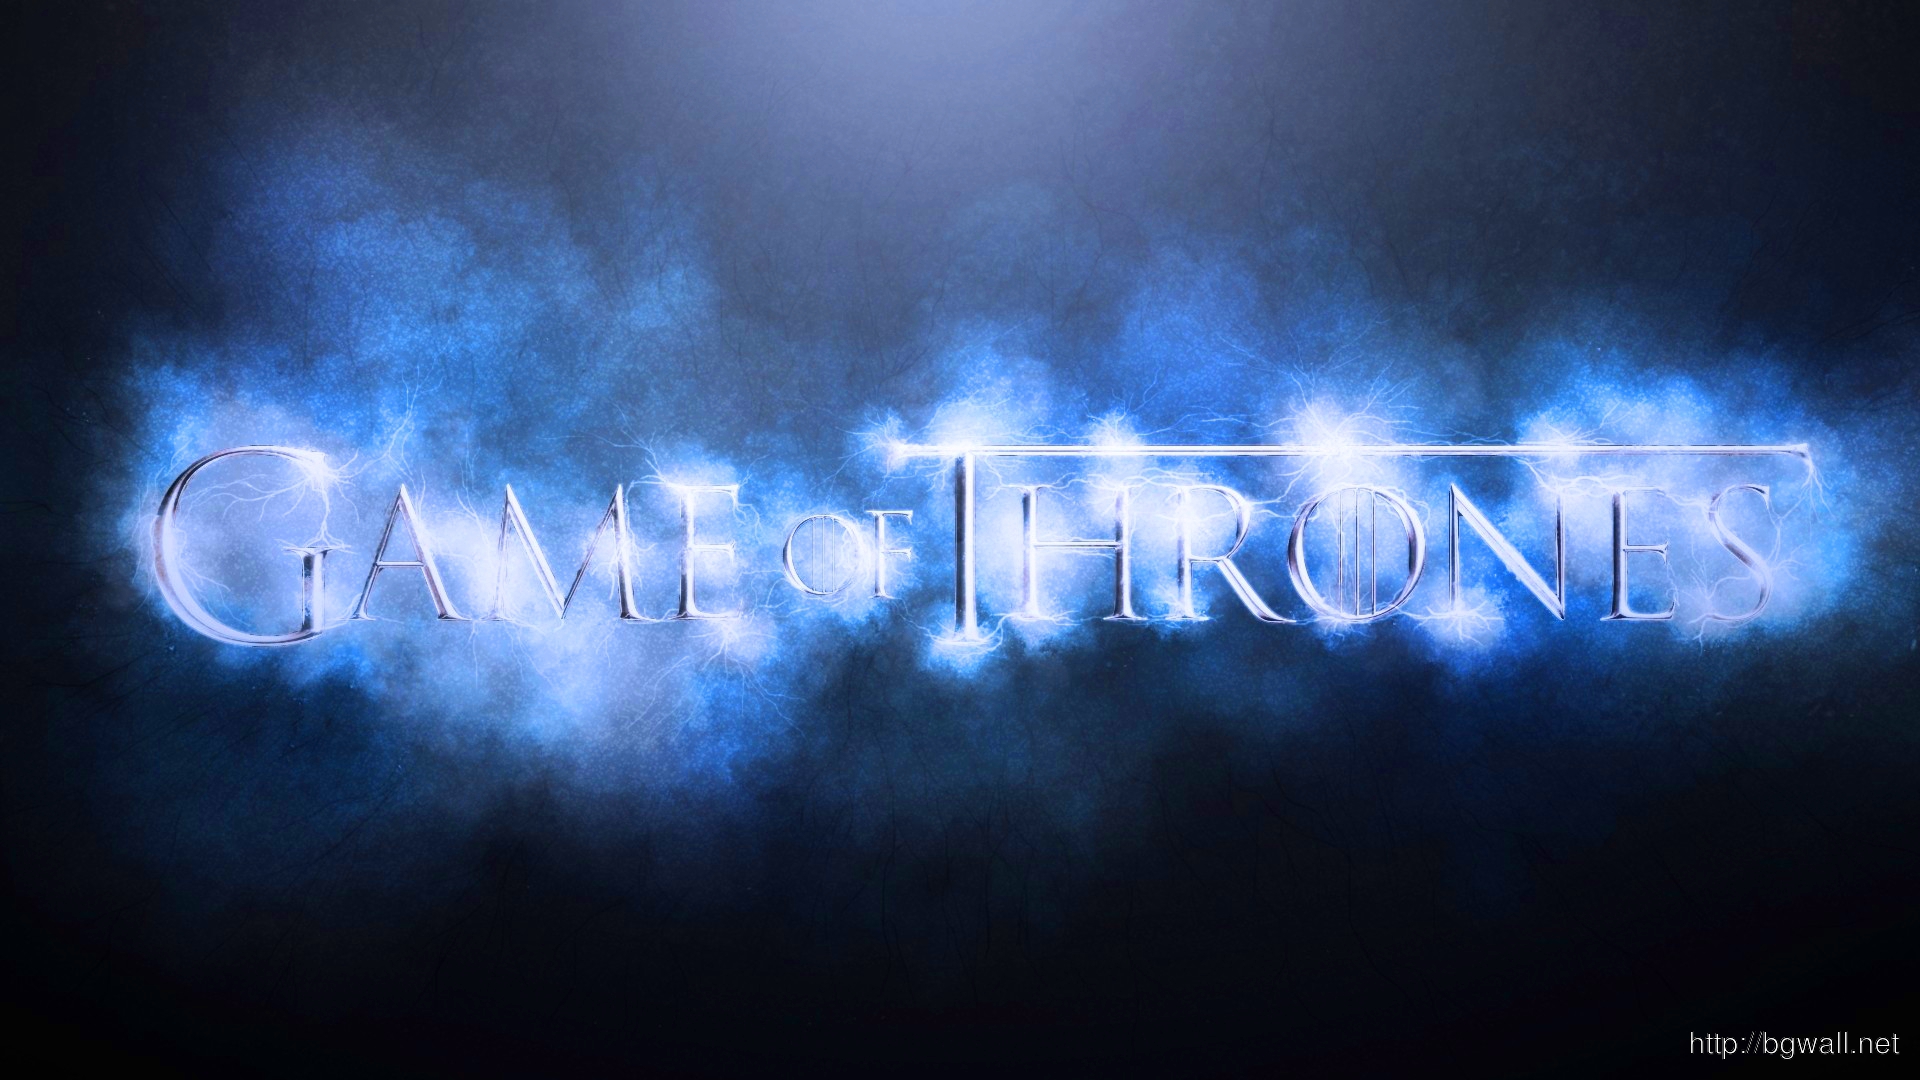 game of thrones wallpaper hd,sky,text,blue,font,light